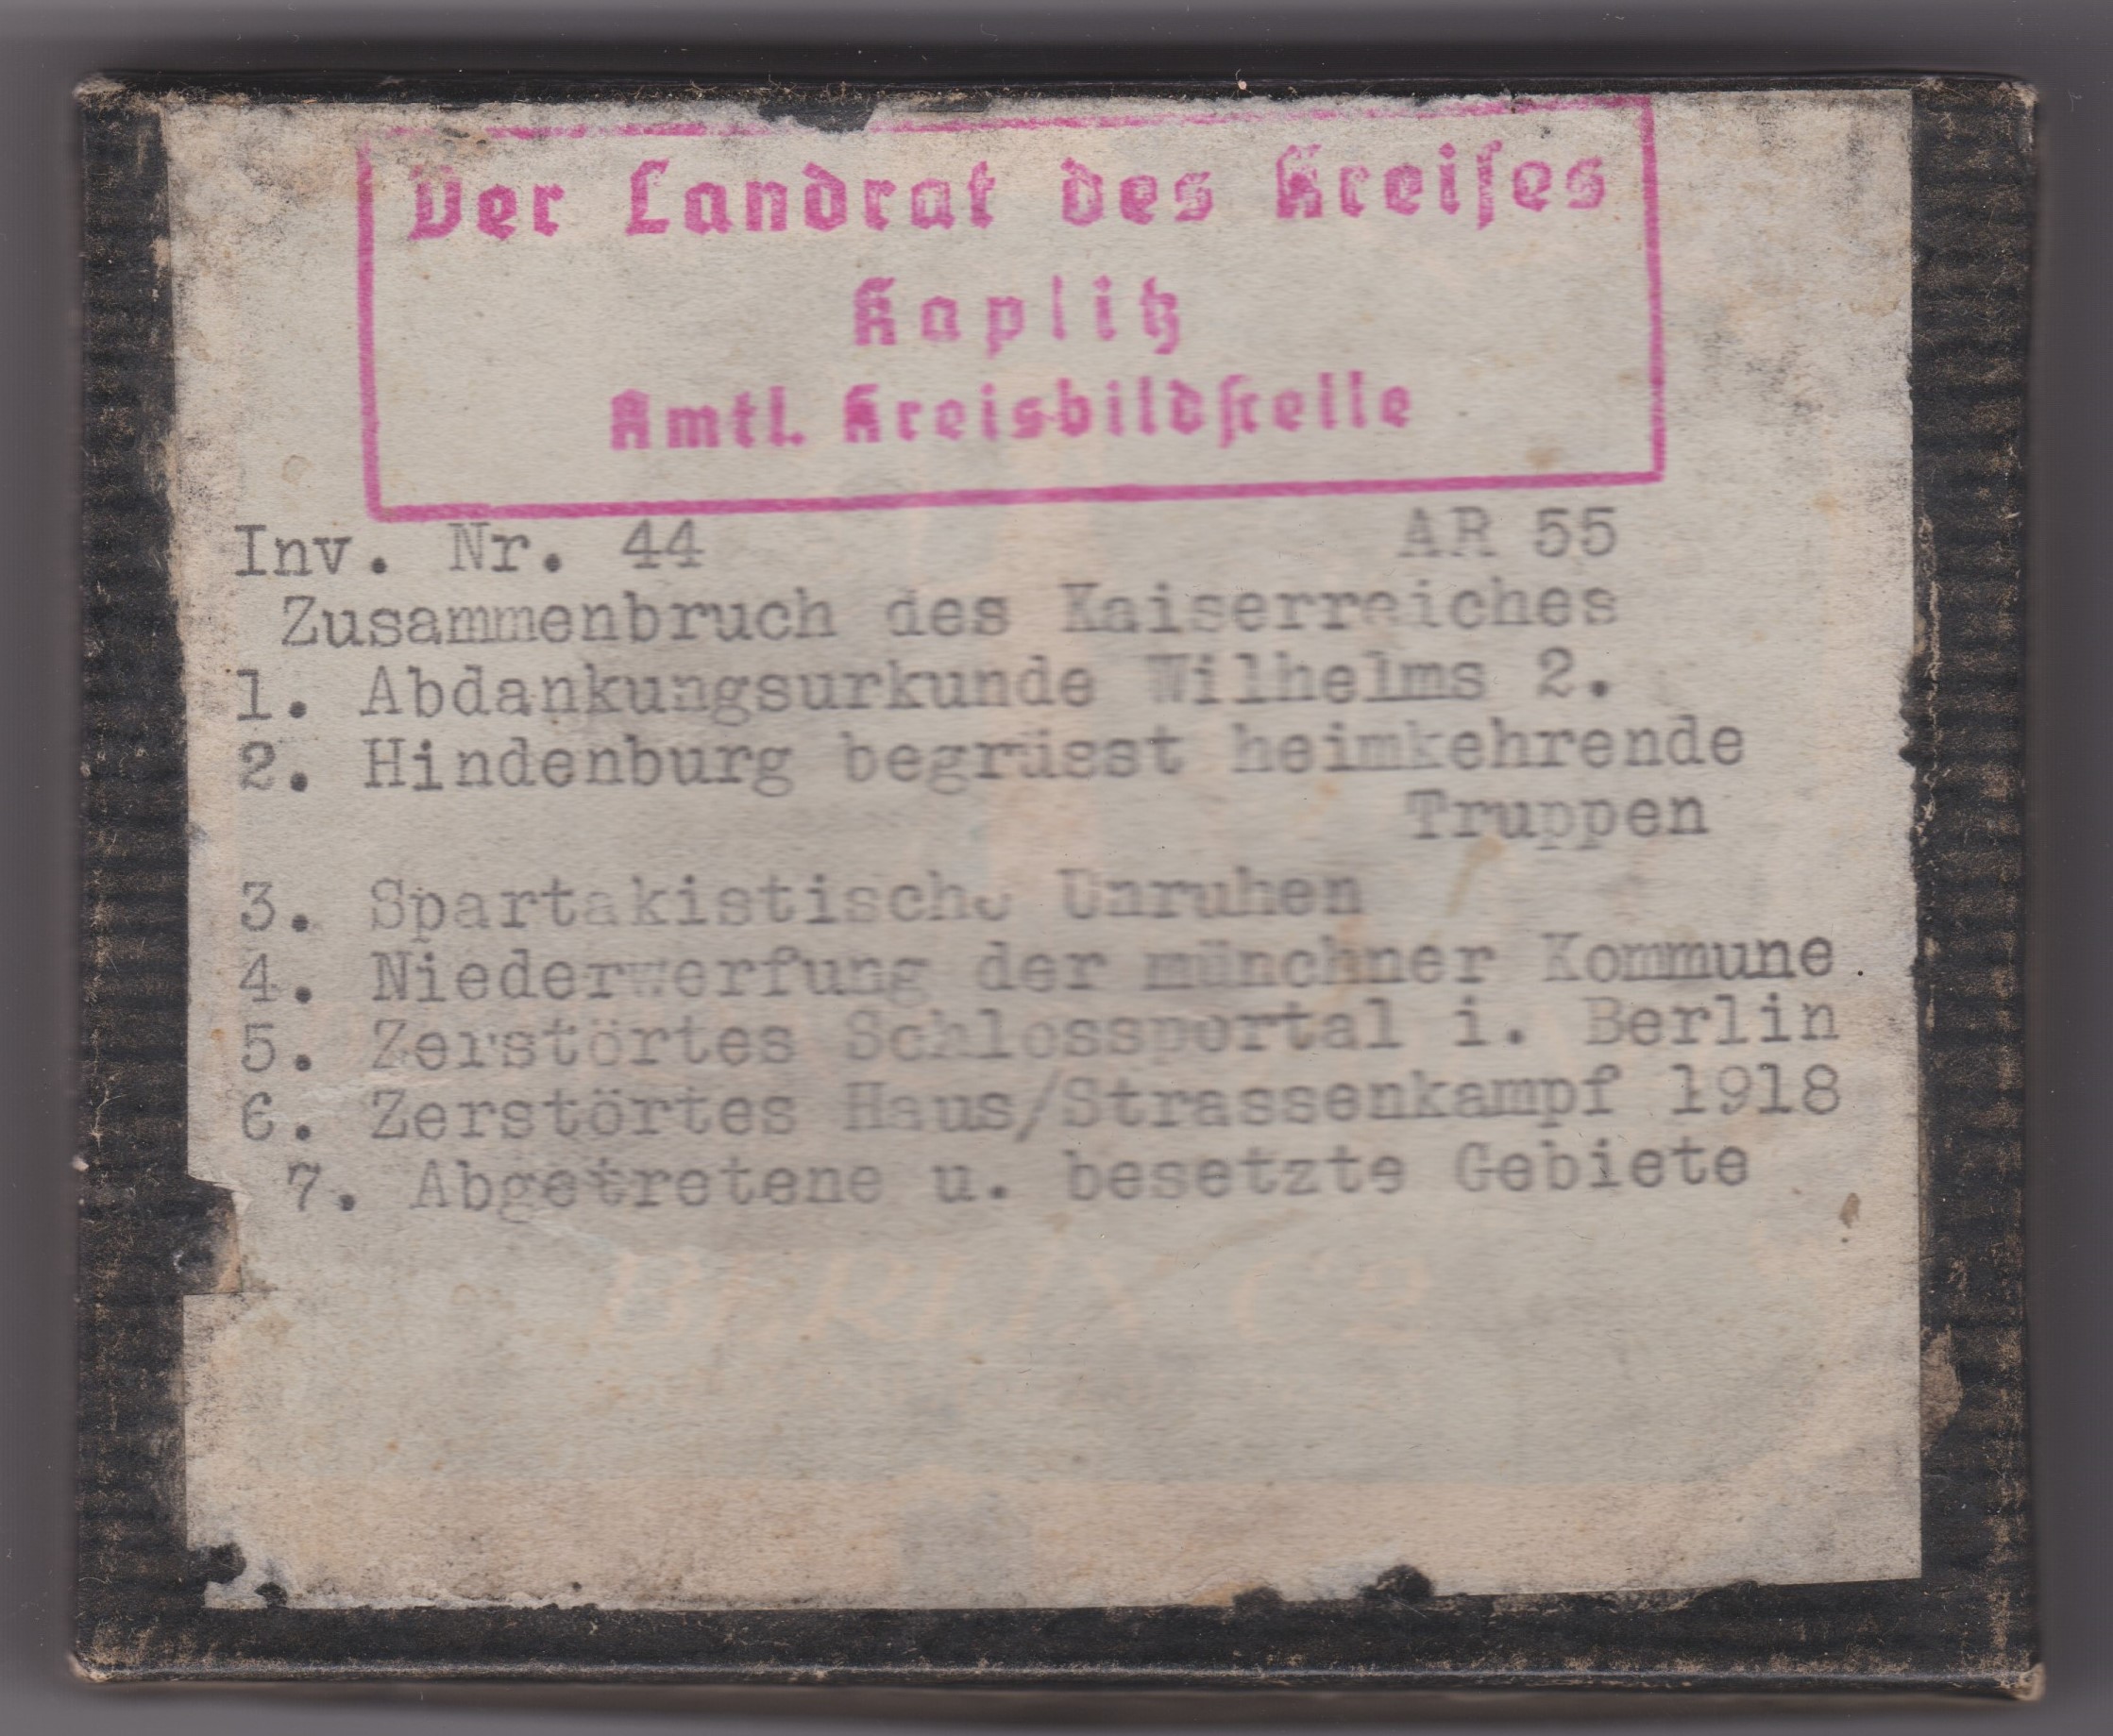 German 1938 box of Glass slides (5 slides out of 7 present) Series No. 44 by Dr Franz Stoedtner on